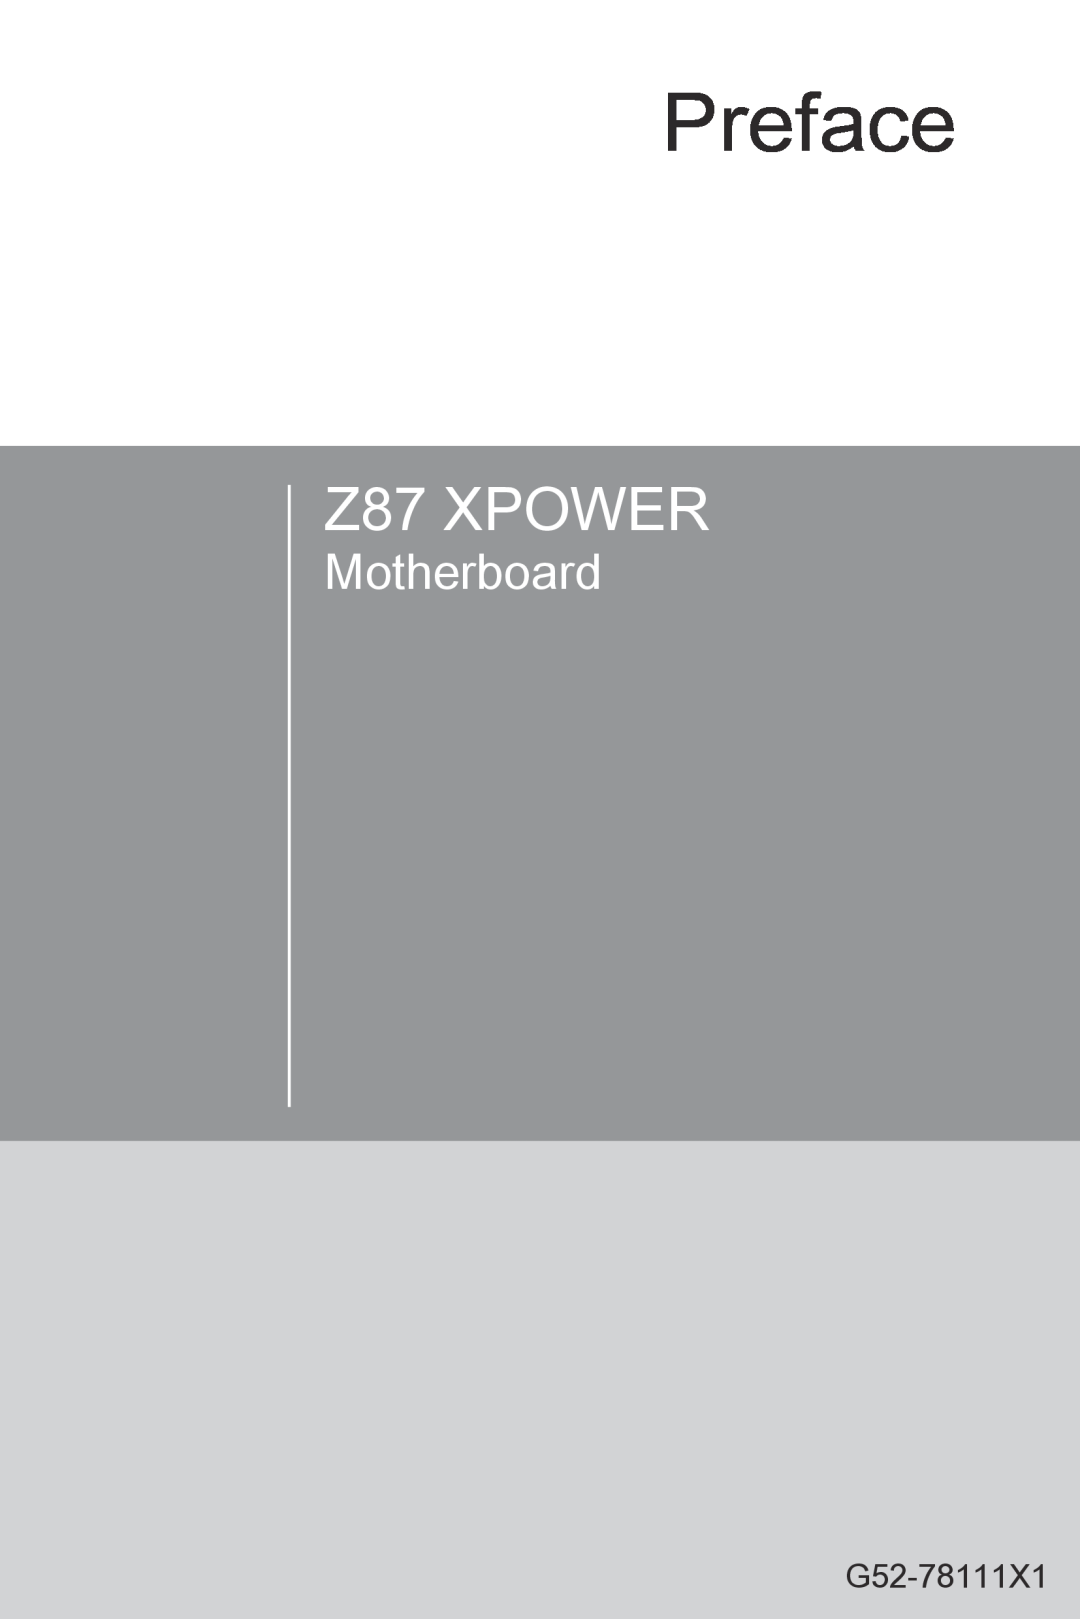 MSI Z87-XPOWER manual Preface, Motherboard, G52-78111X1, Z87 XPOWER 